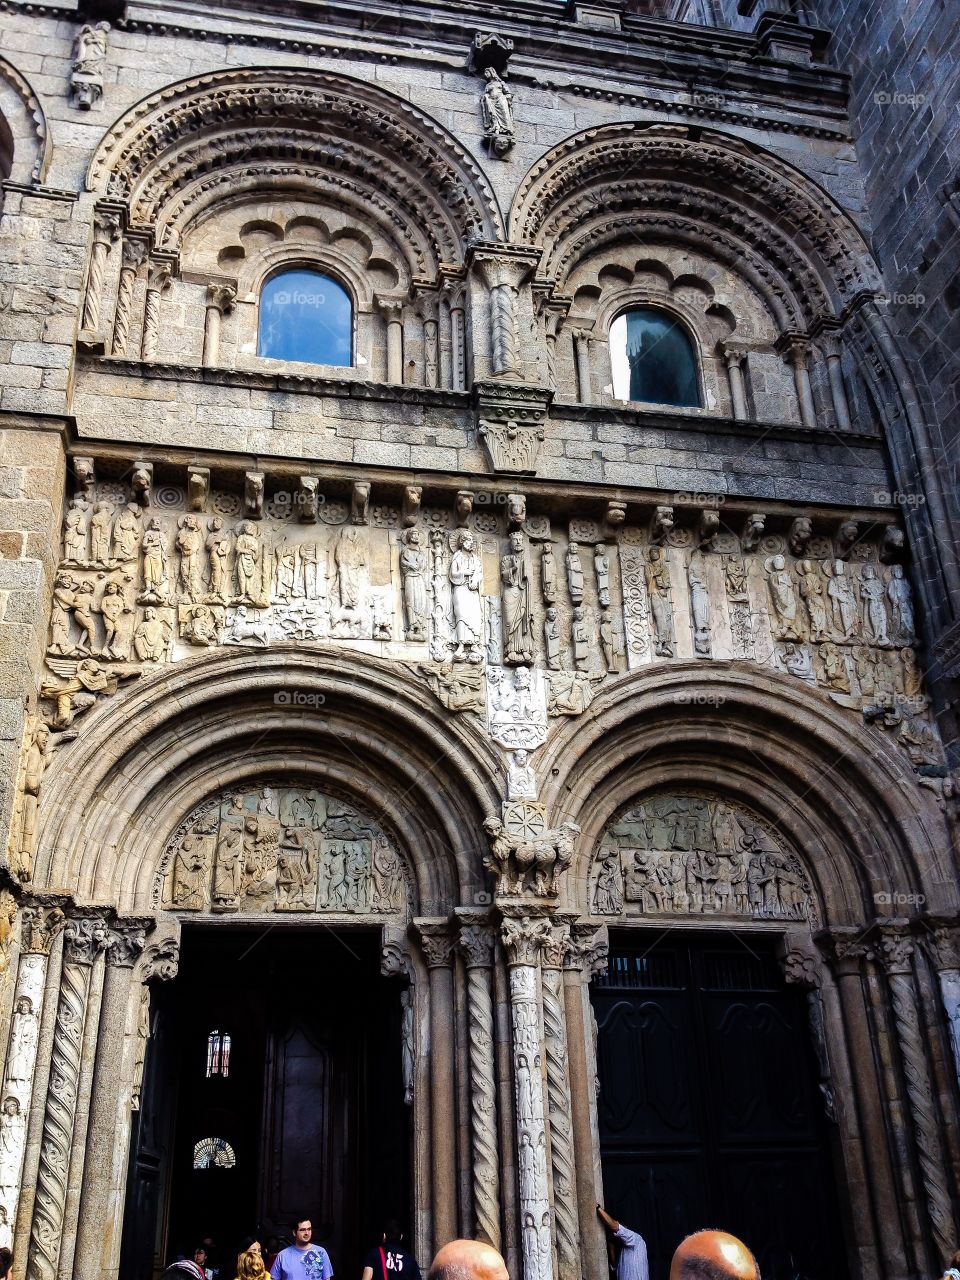 Detalle Fachada Catedral. Detalle Fachada de las Platerias, Catedral de Santiago de Compostela (Santiago de Compostela - Spain)